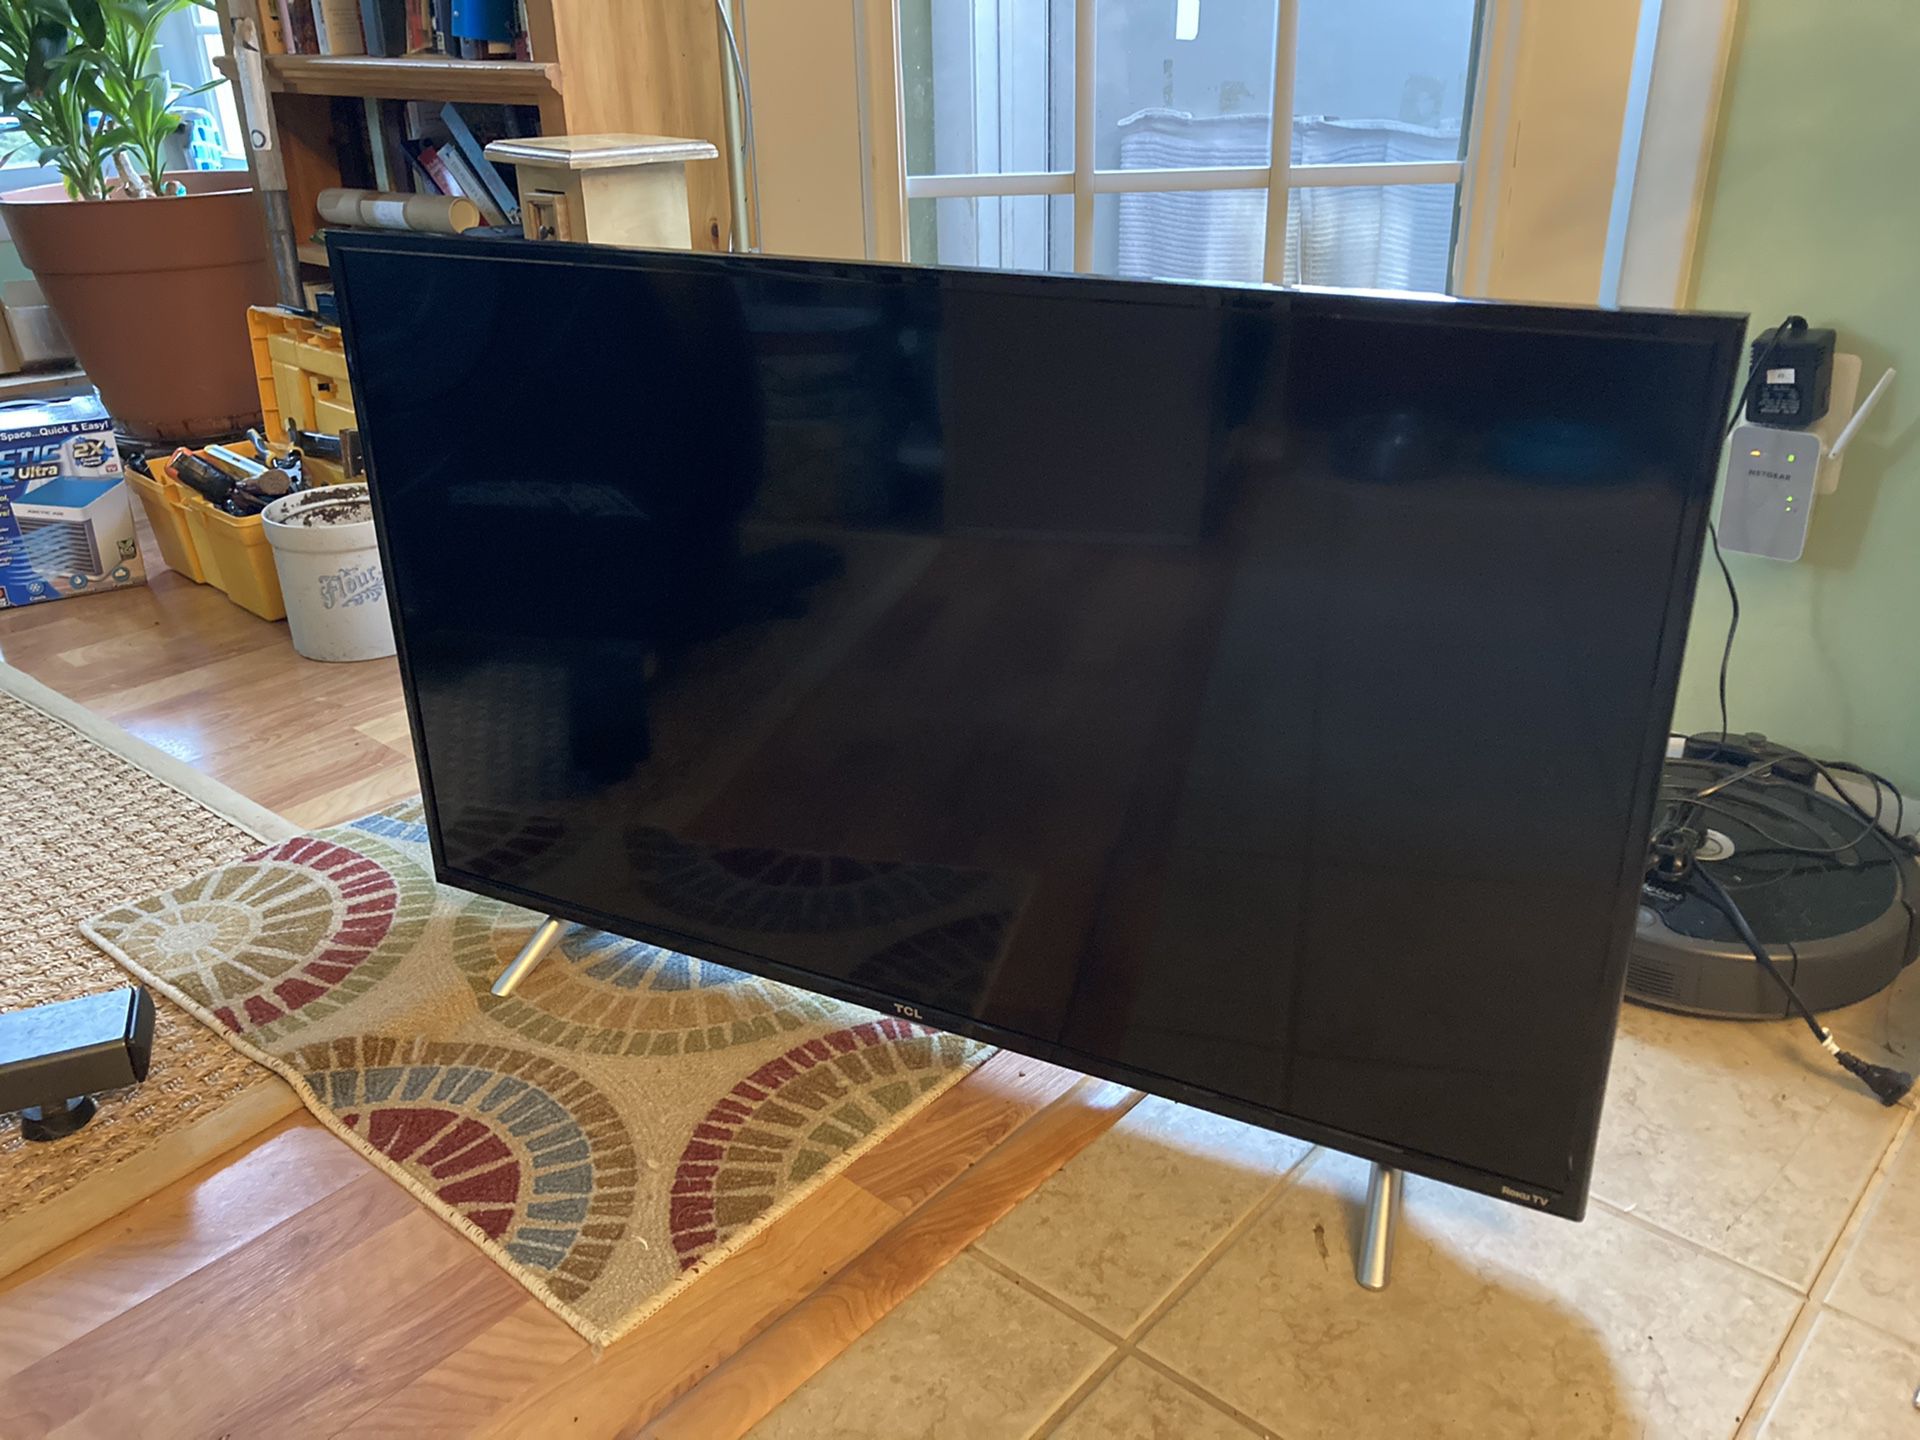 TCL S405 4K Smart TV - 45’ Display